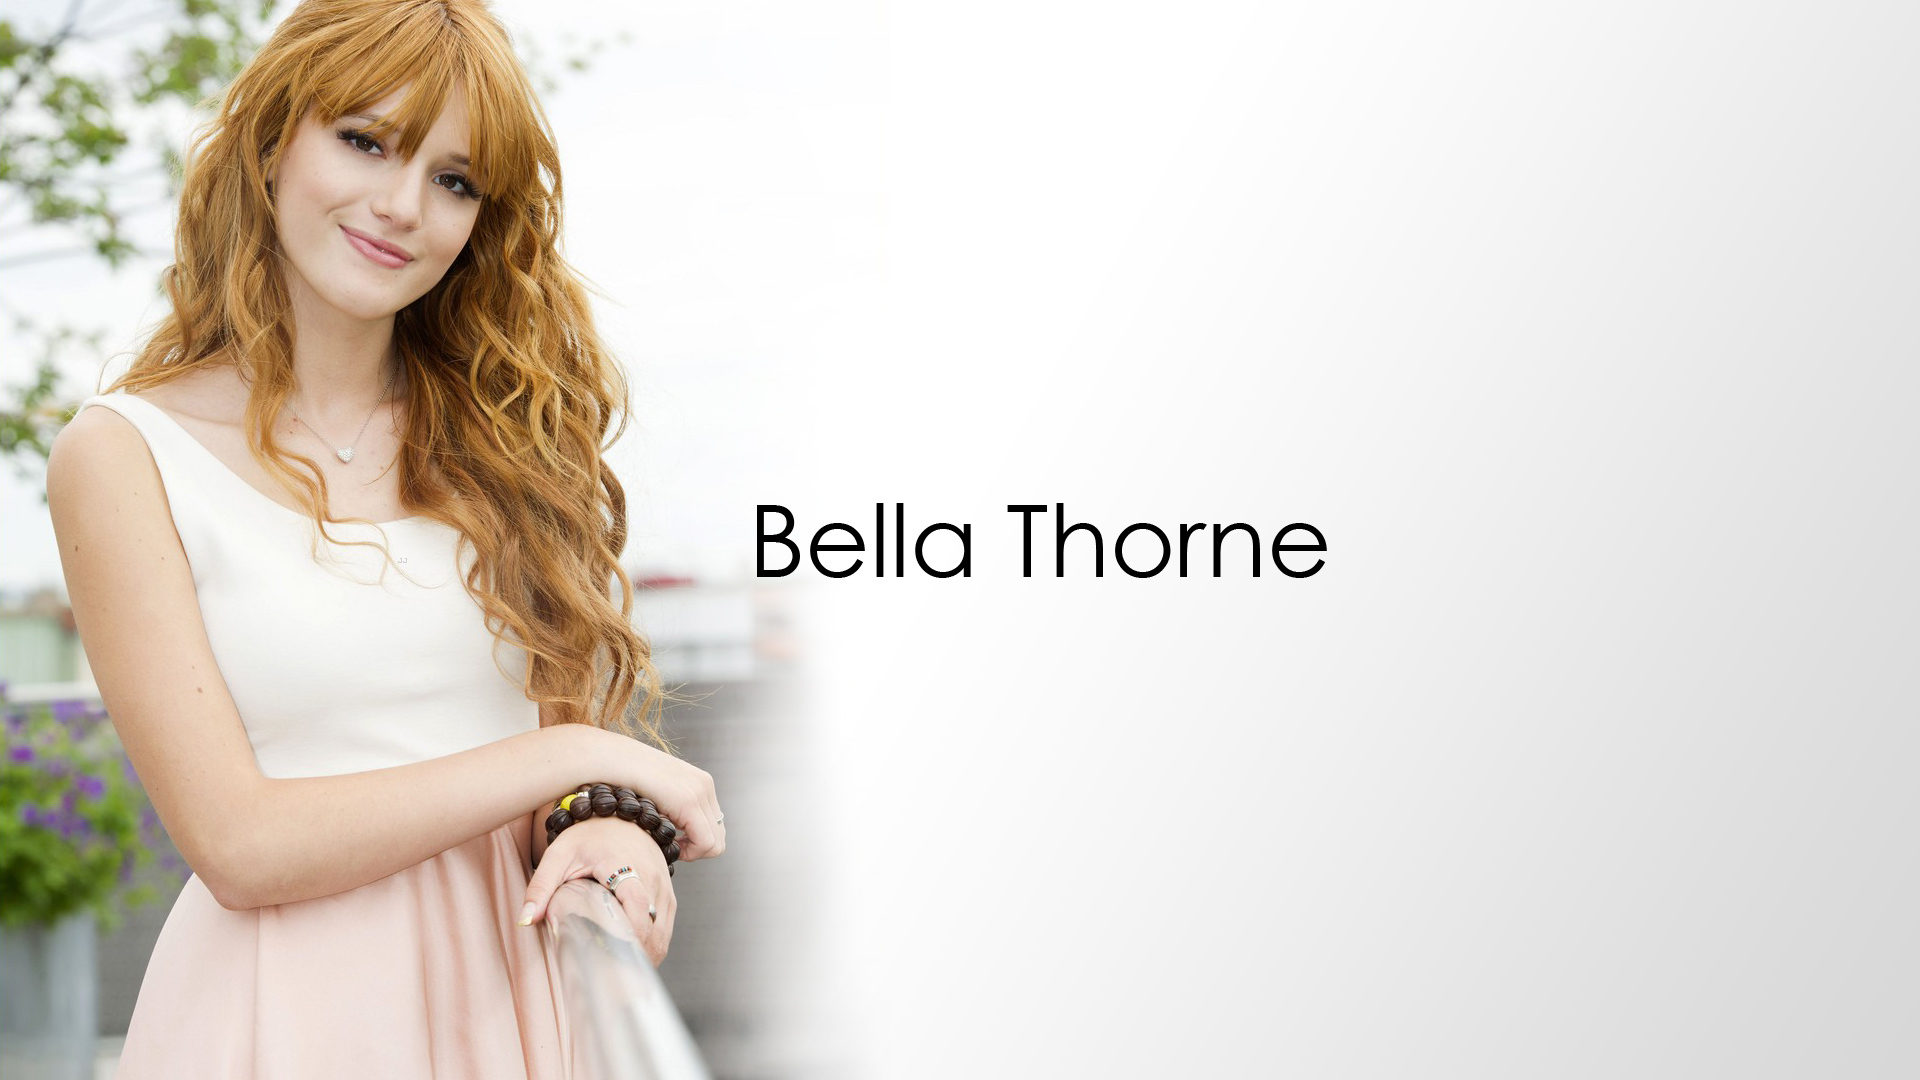 Bella thorne photoshoot 2016